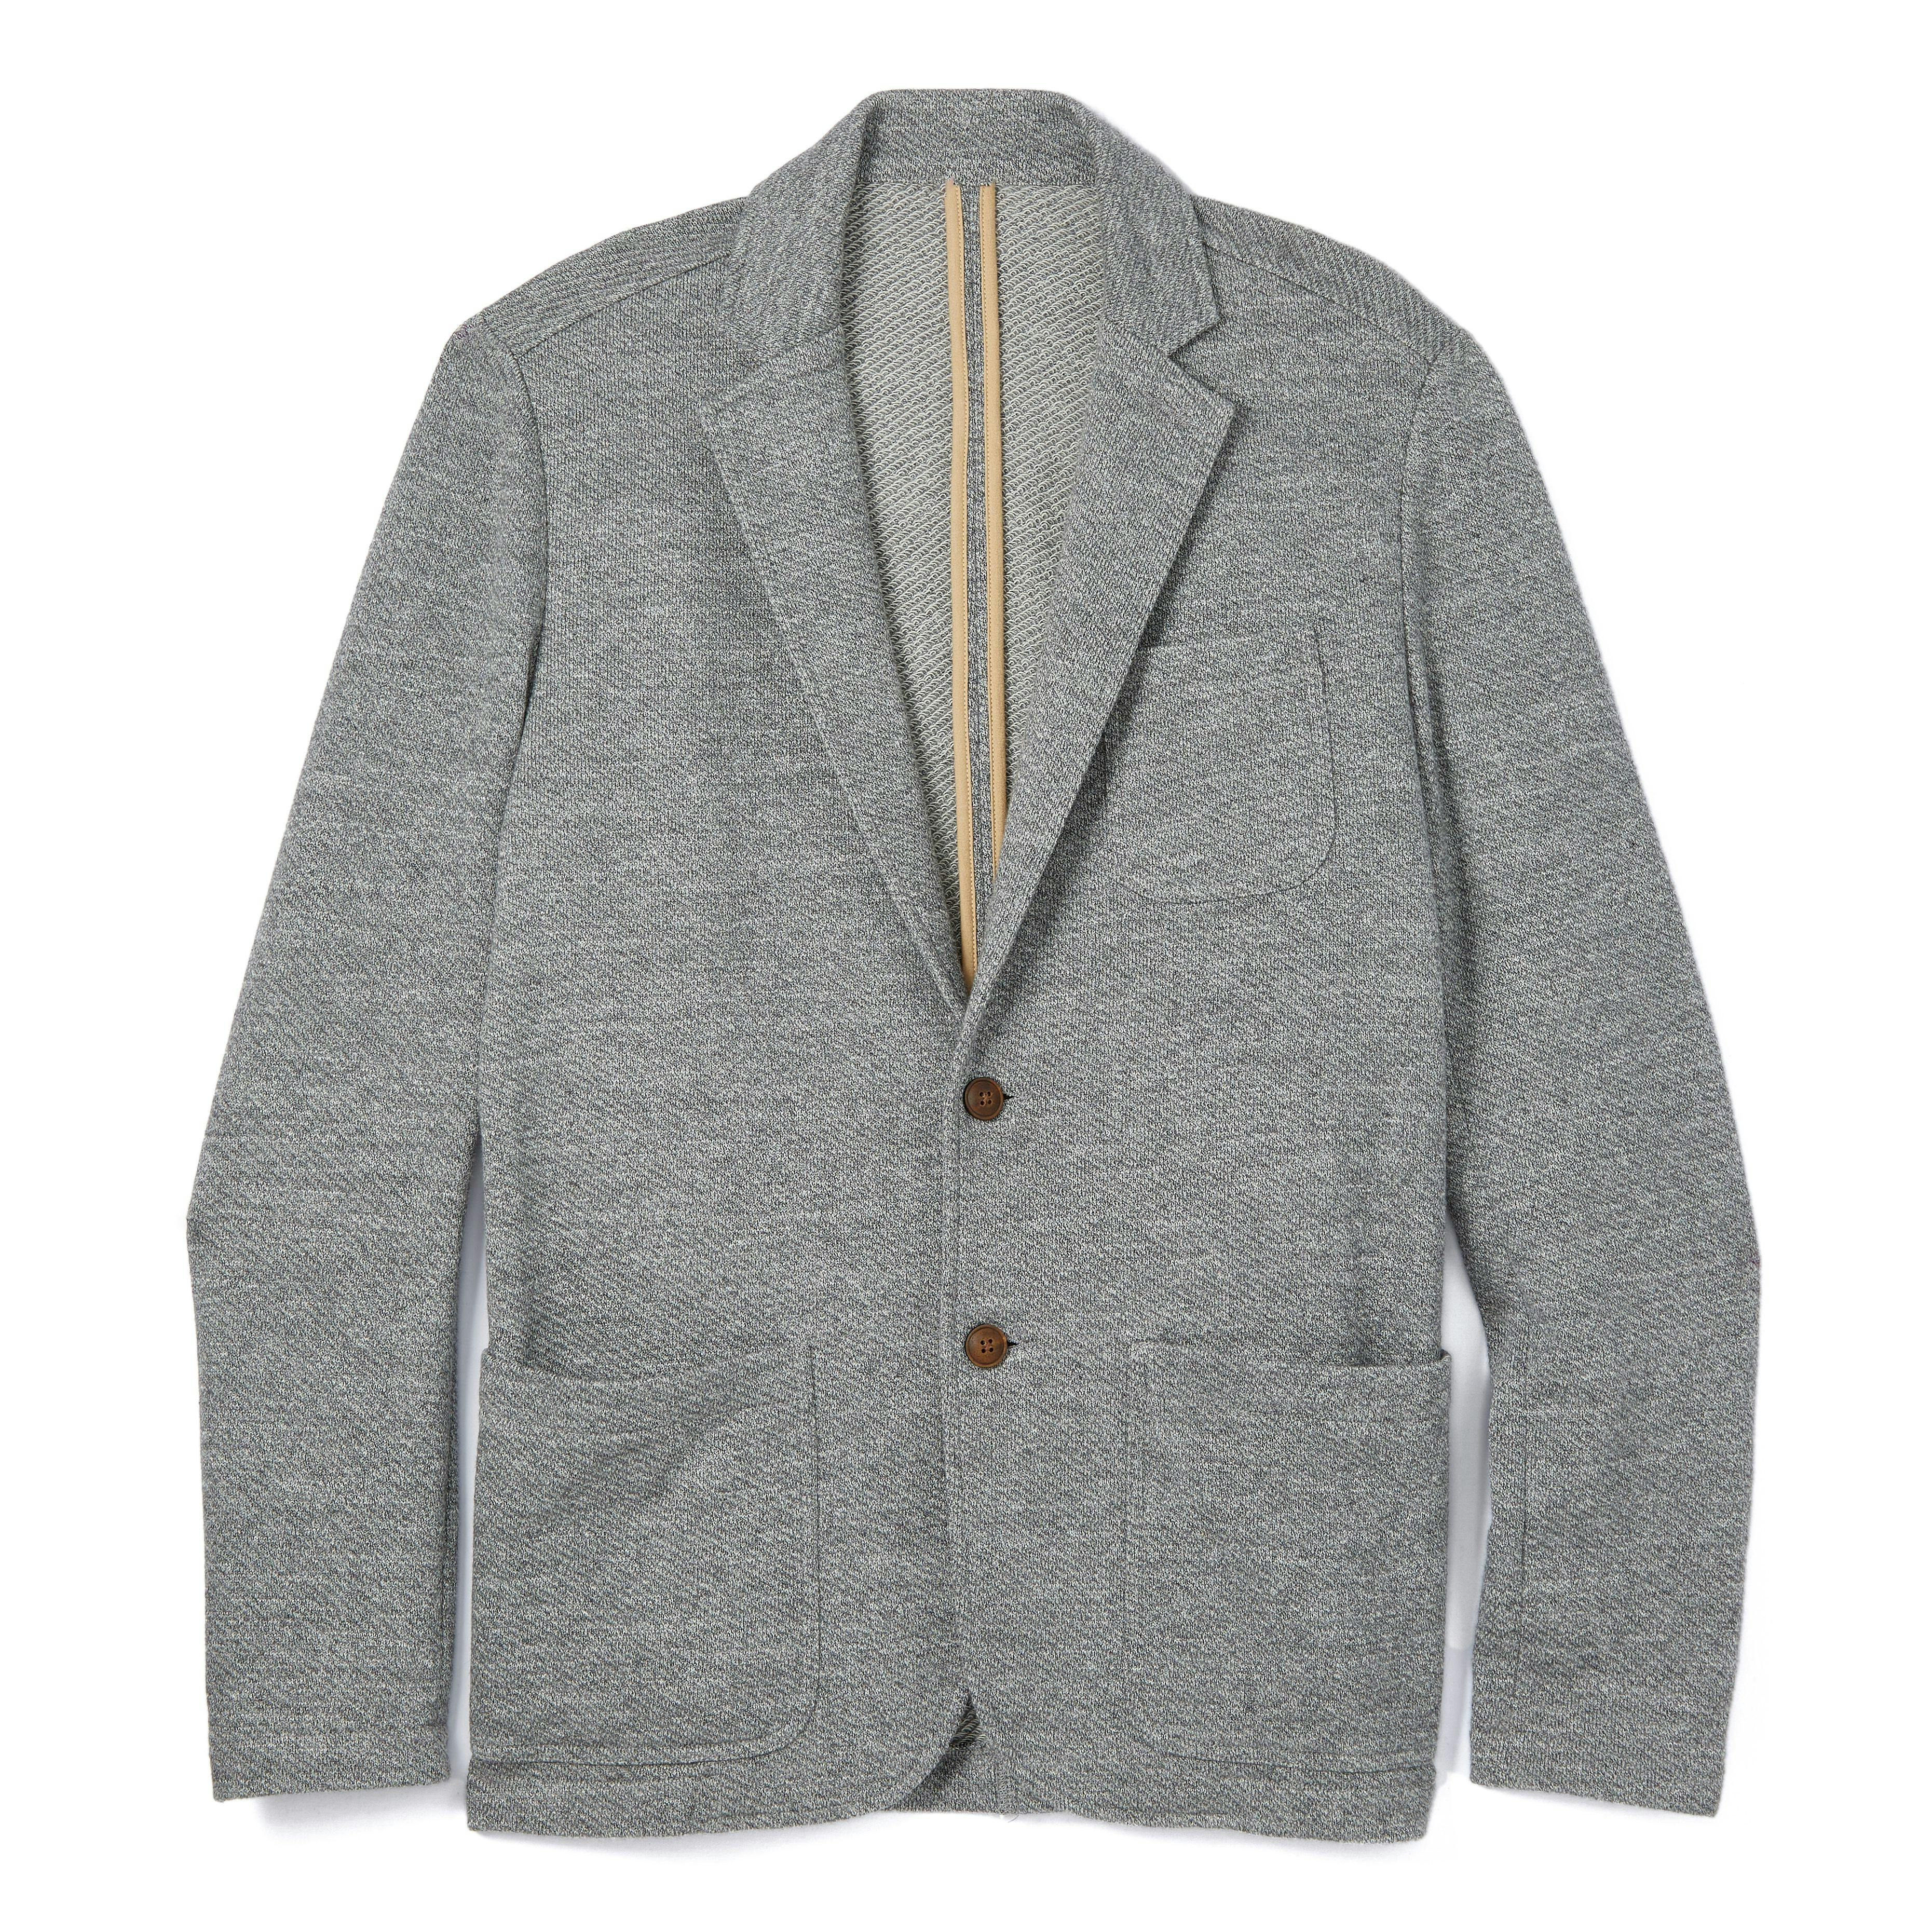 Faherty Brand Inlet Knit Blazer - Medium Gray Melange, Blazers